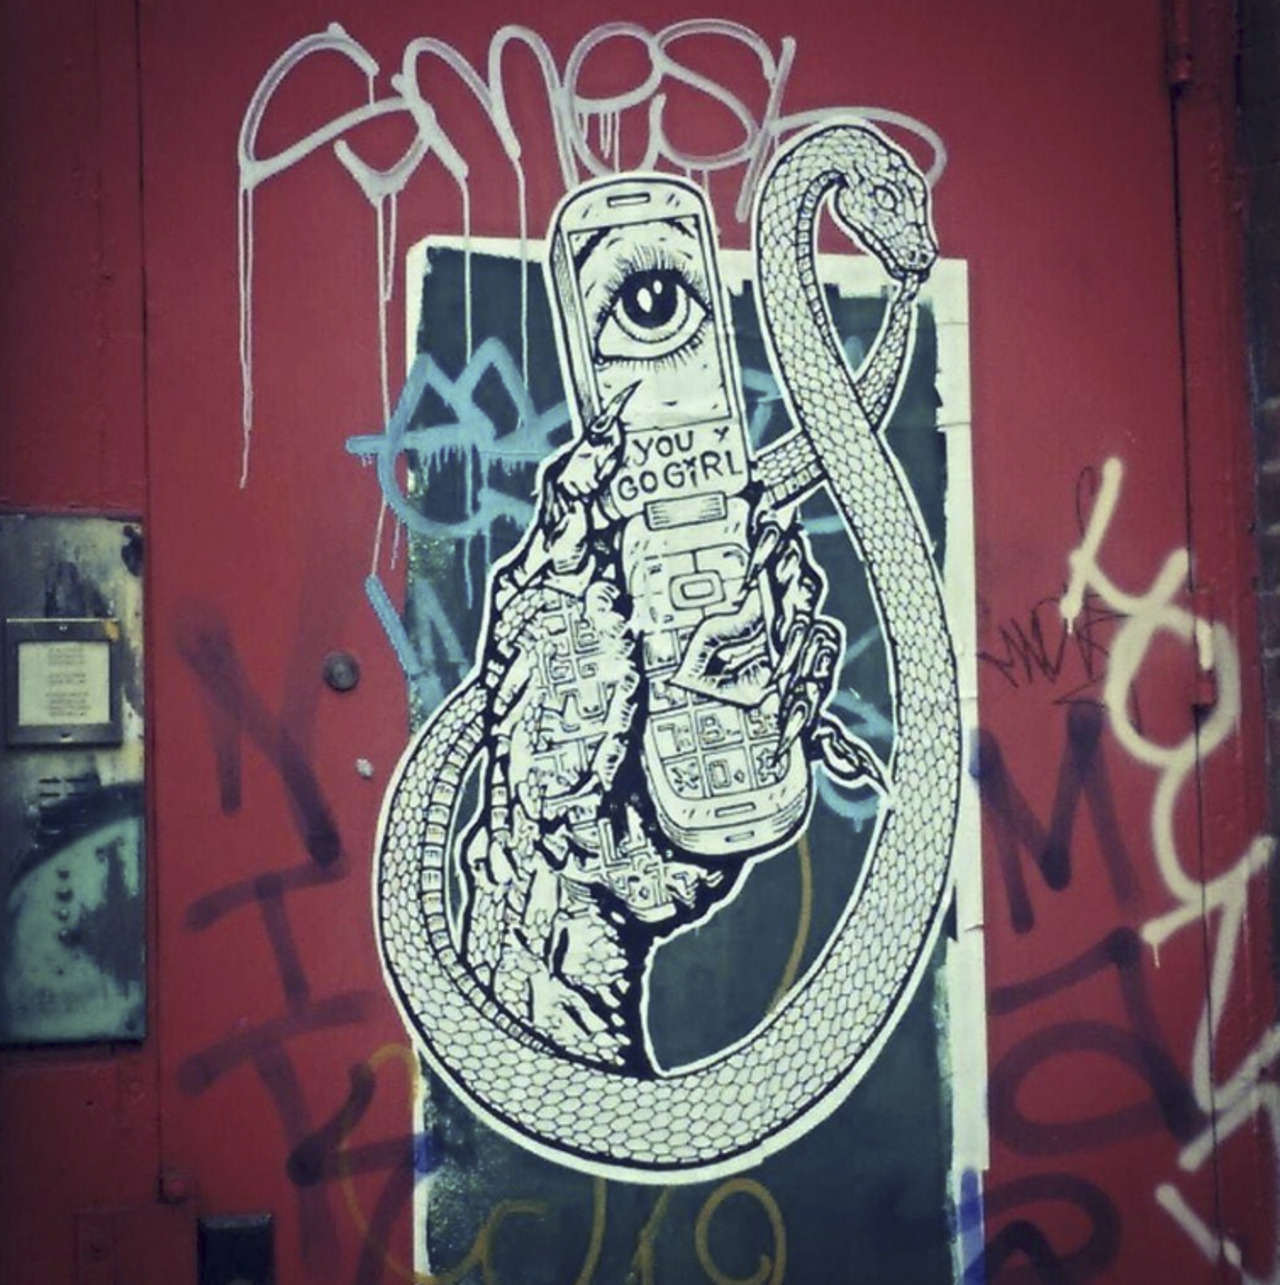 "You go, girl" #wheatpaste graffiti in New York, USA #pasteup #streetart #urbanart #graffiti #SoHo #Manhattan #NYC http://t.co/UEcz5EESDs